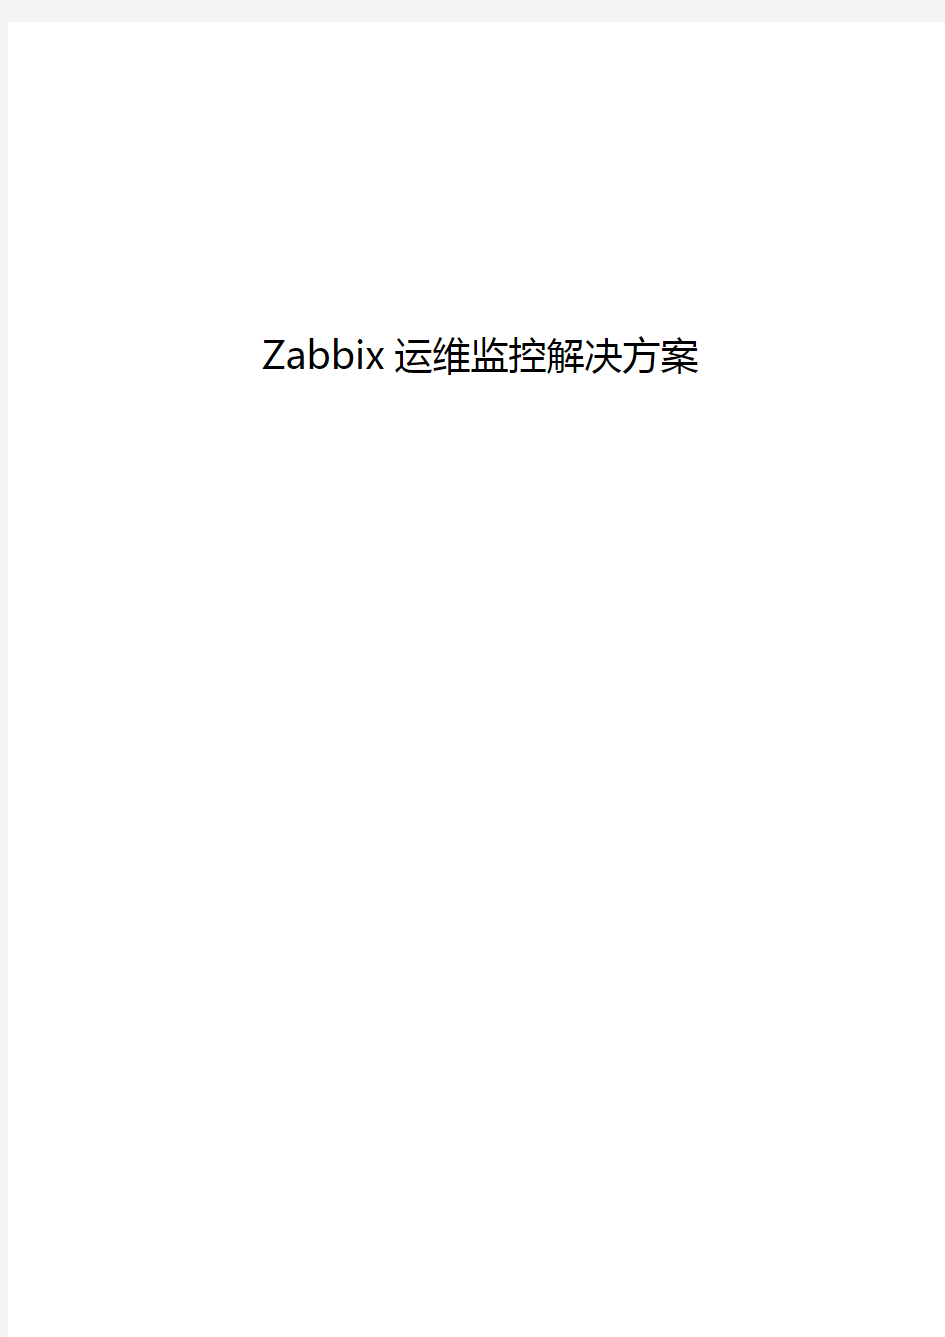 Zabbix运维监控平台解决方案